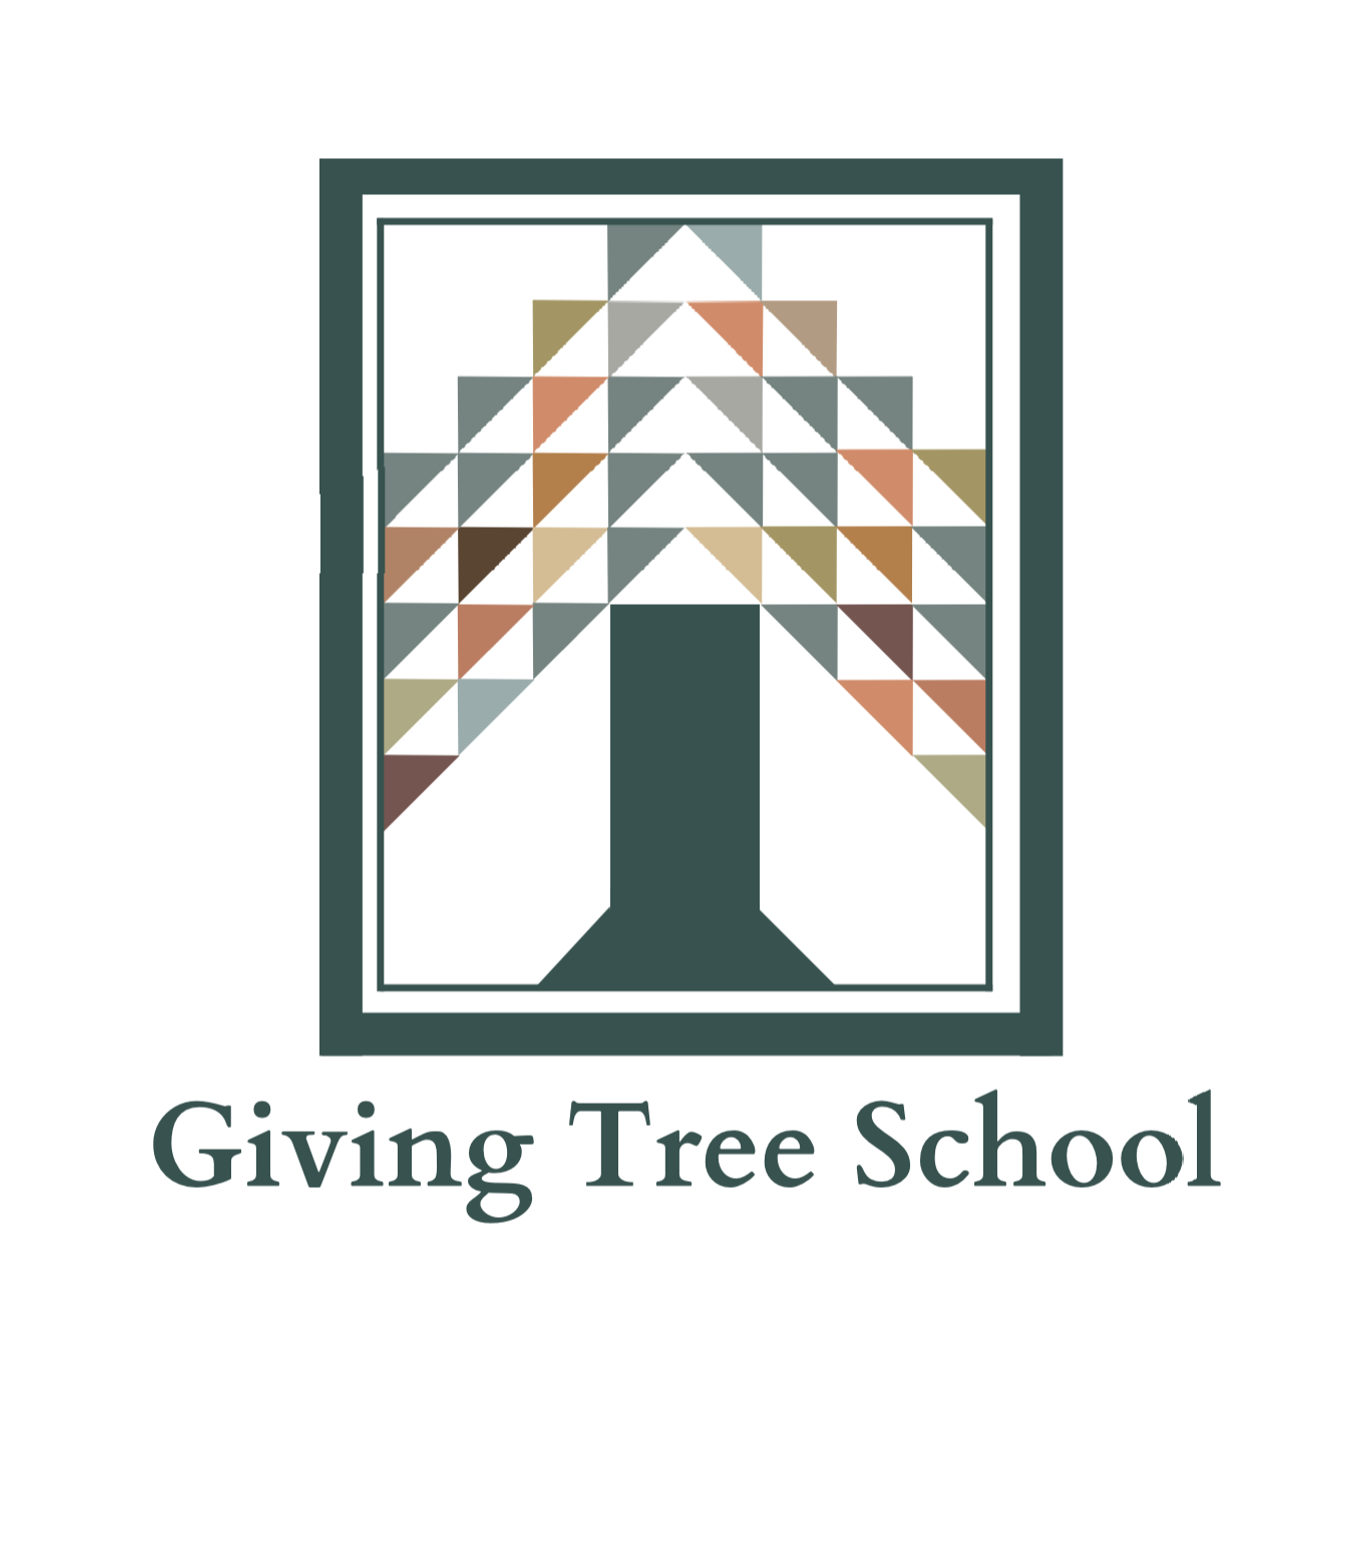 Giving Tree School Inc logo